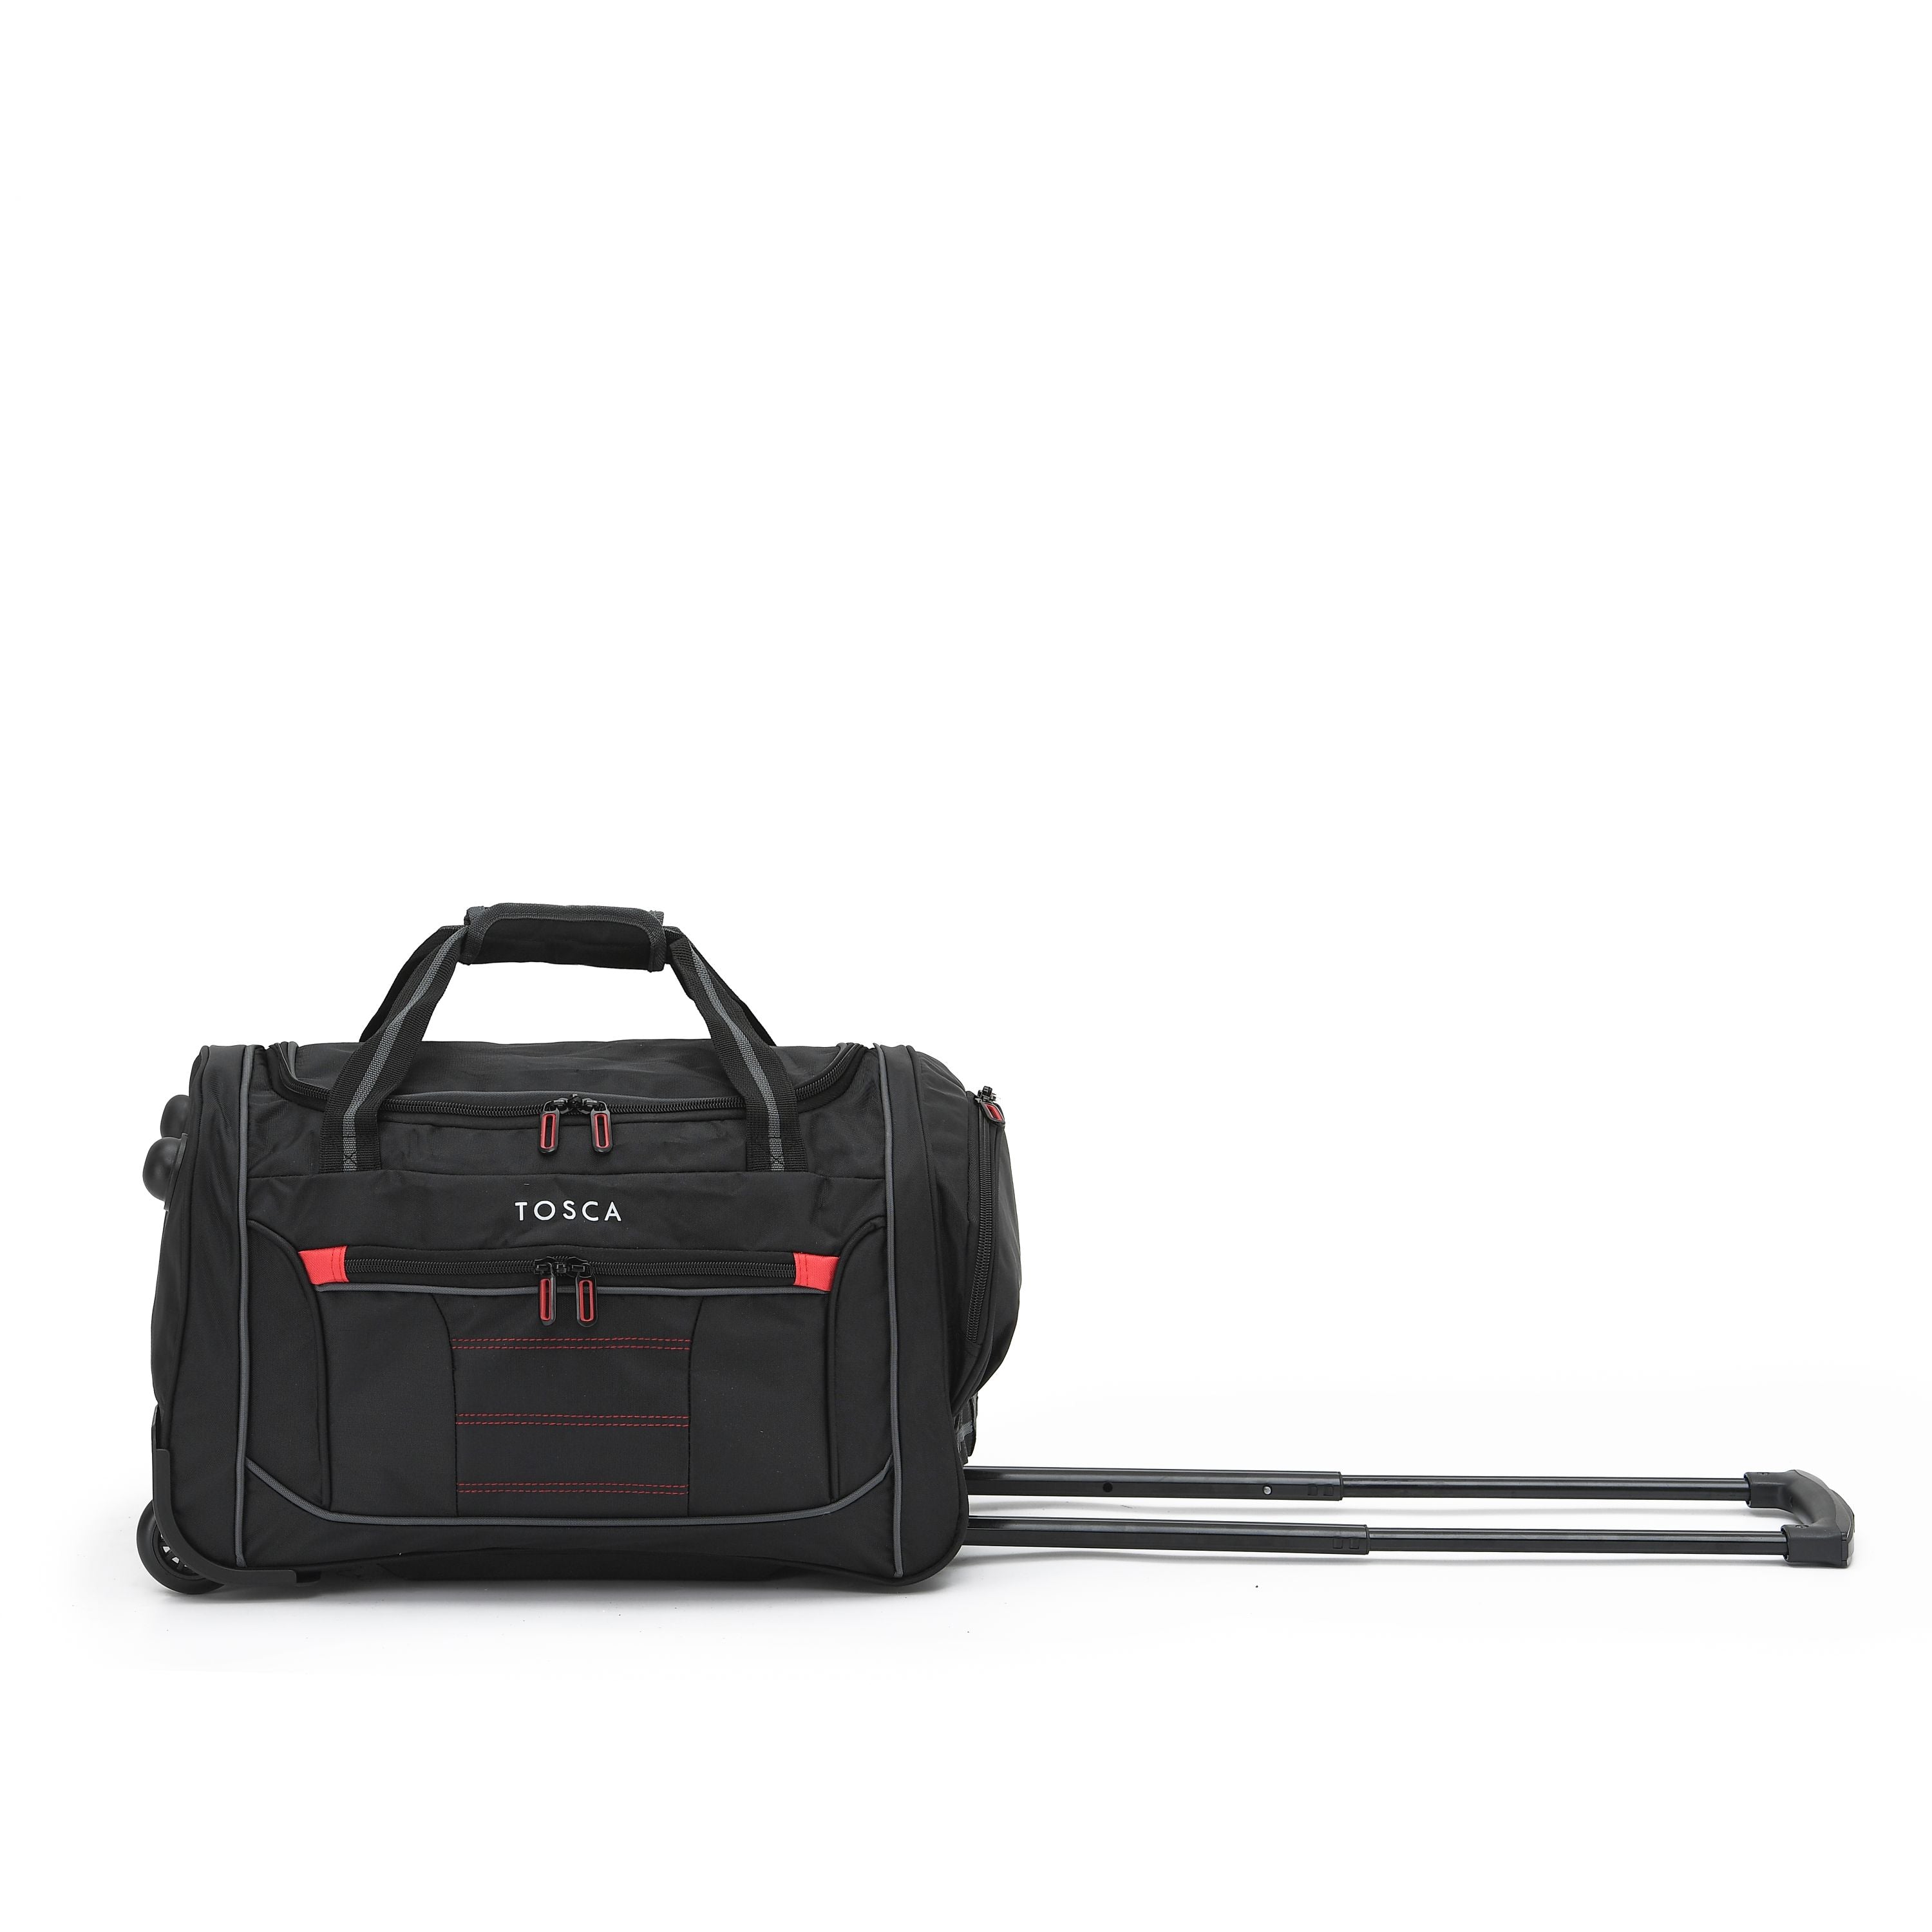 Tosca - TCA794TW/SA 48cm Small Wheeled Duffle Bag - Black/Red